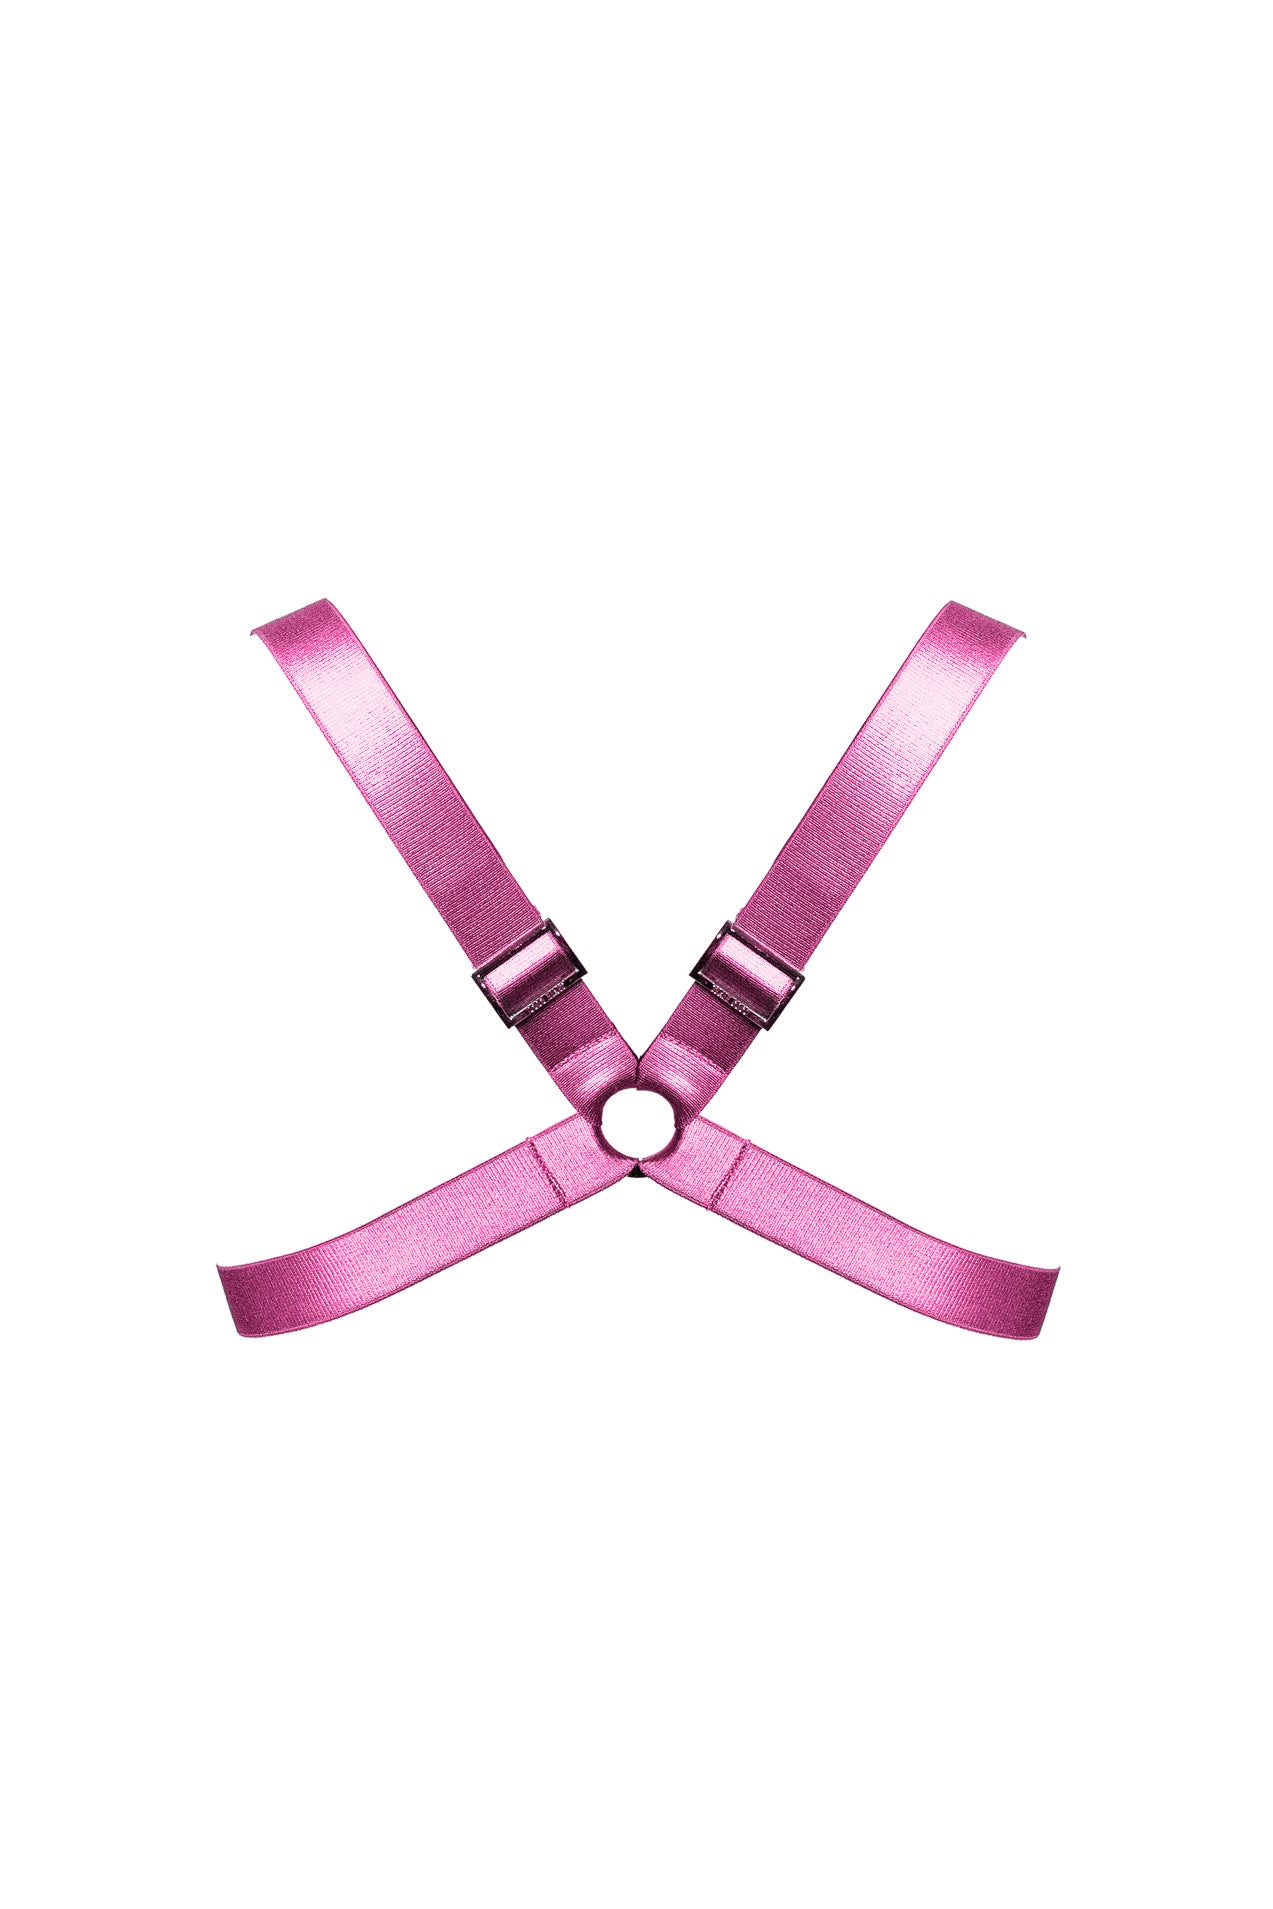 Wishbone Bra Harness - Candy Pink